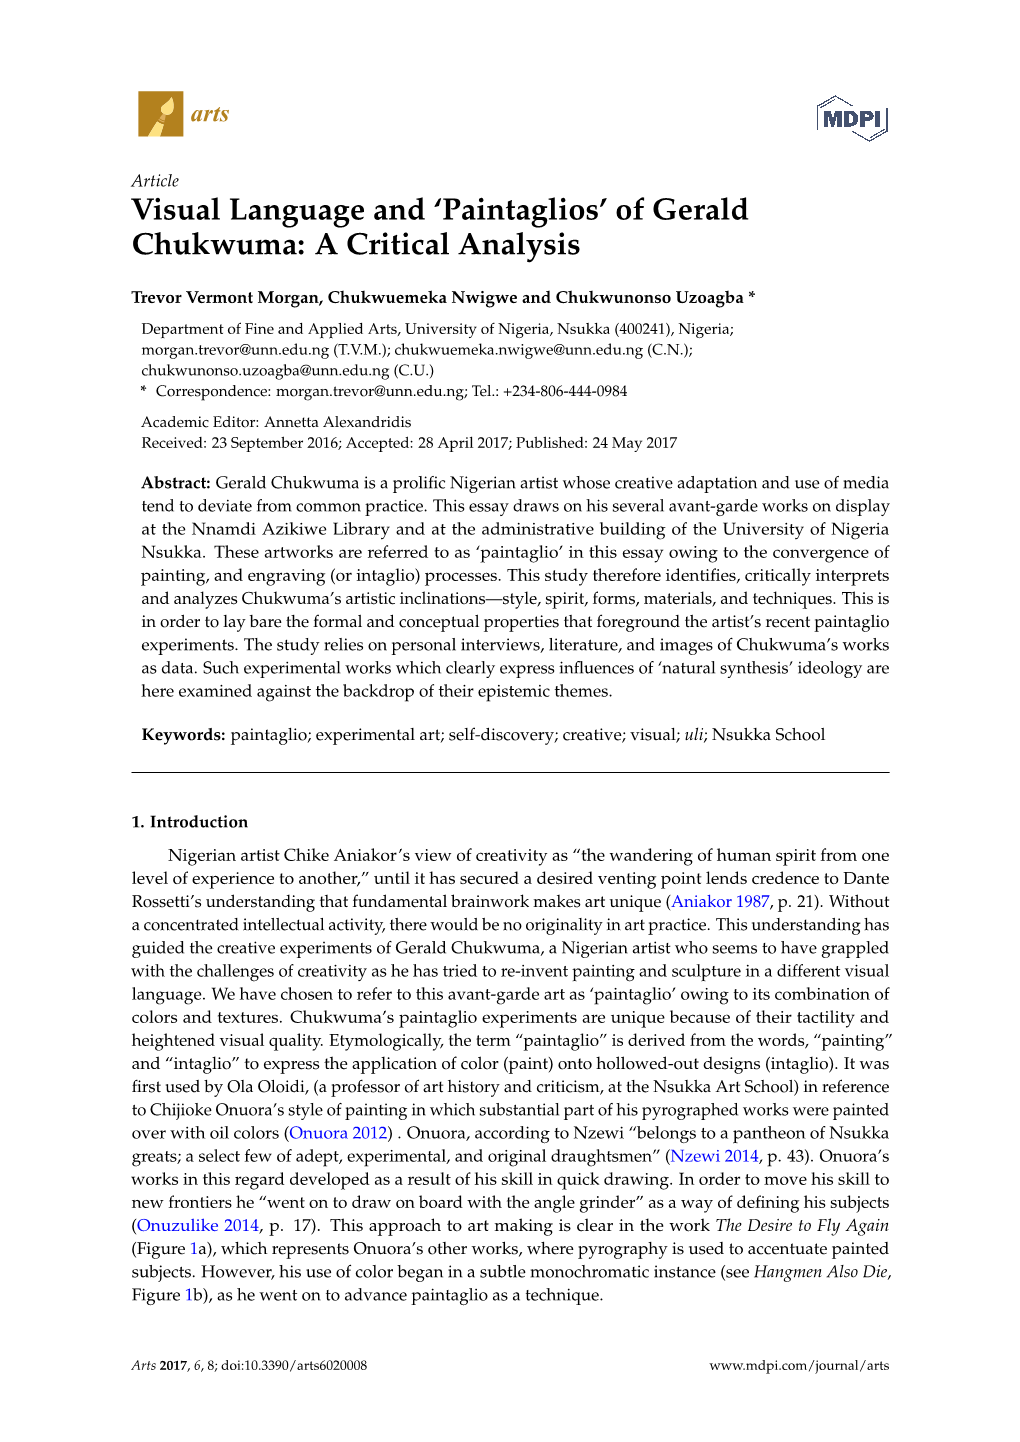 Of Gerald Chukwuma: a Critical Analysis